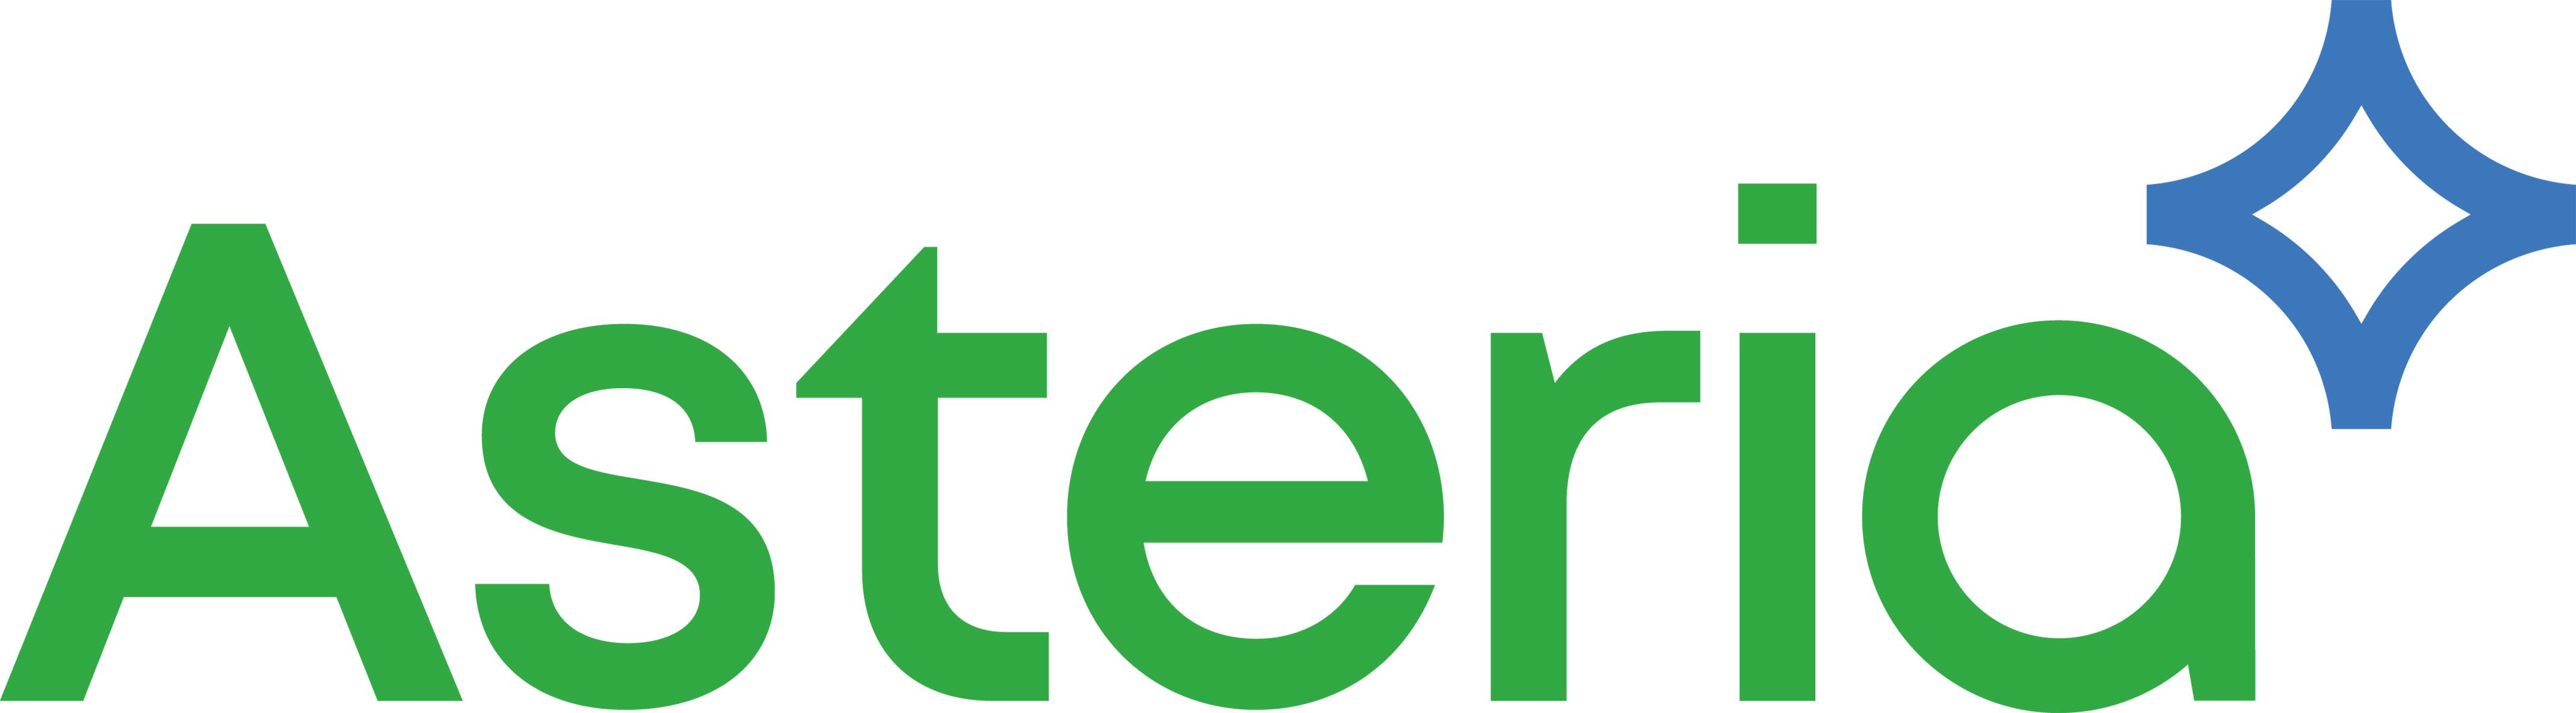 Asteria_Colour_Logo.jpg